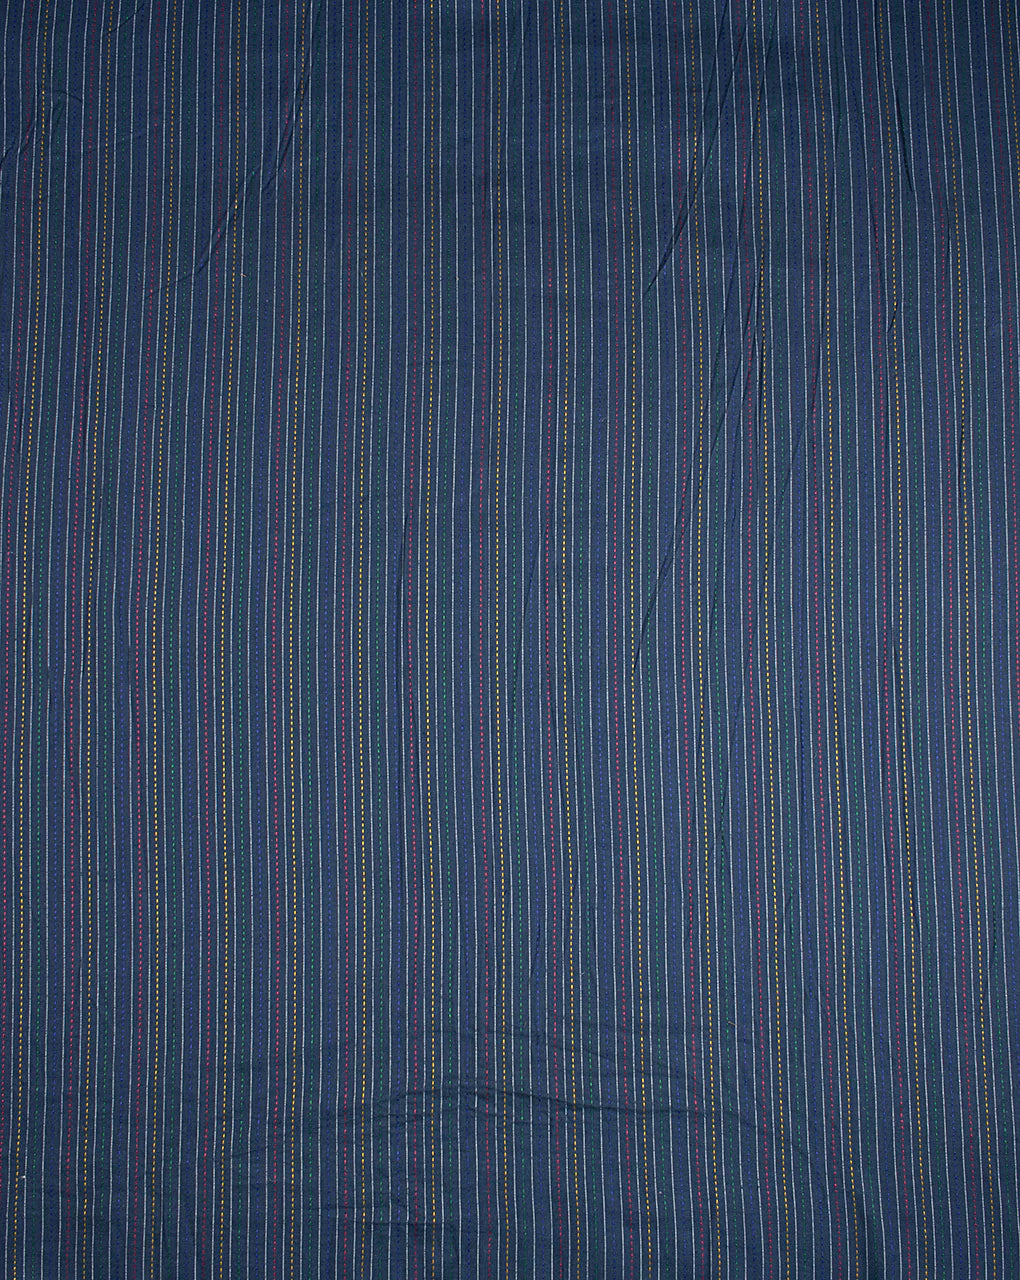 Blue Kantha Cotton Fabric - Fabriclore.com